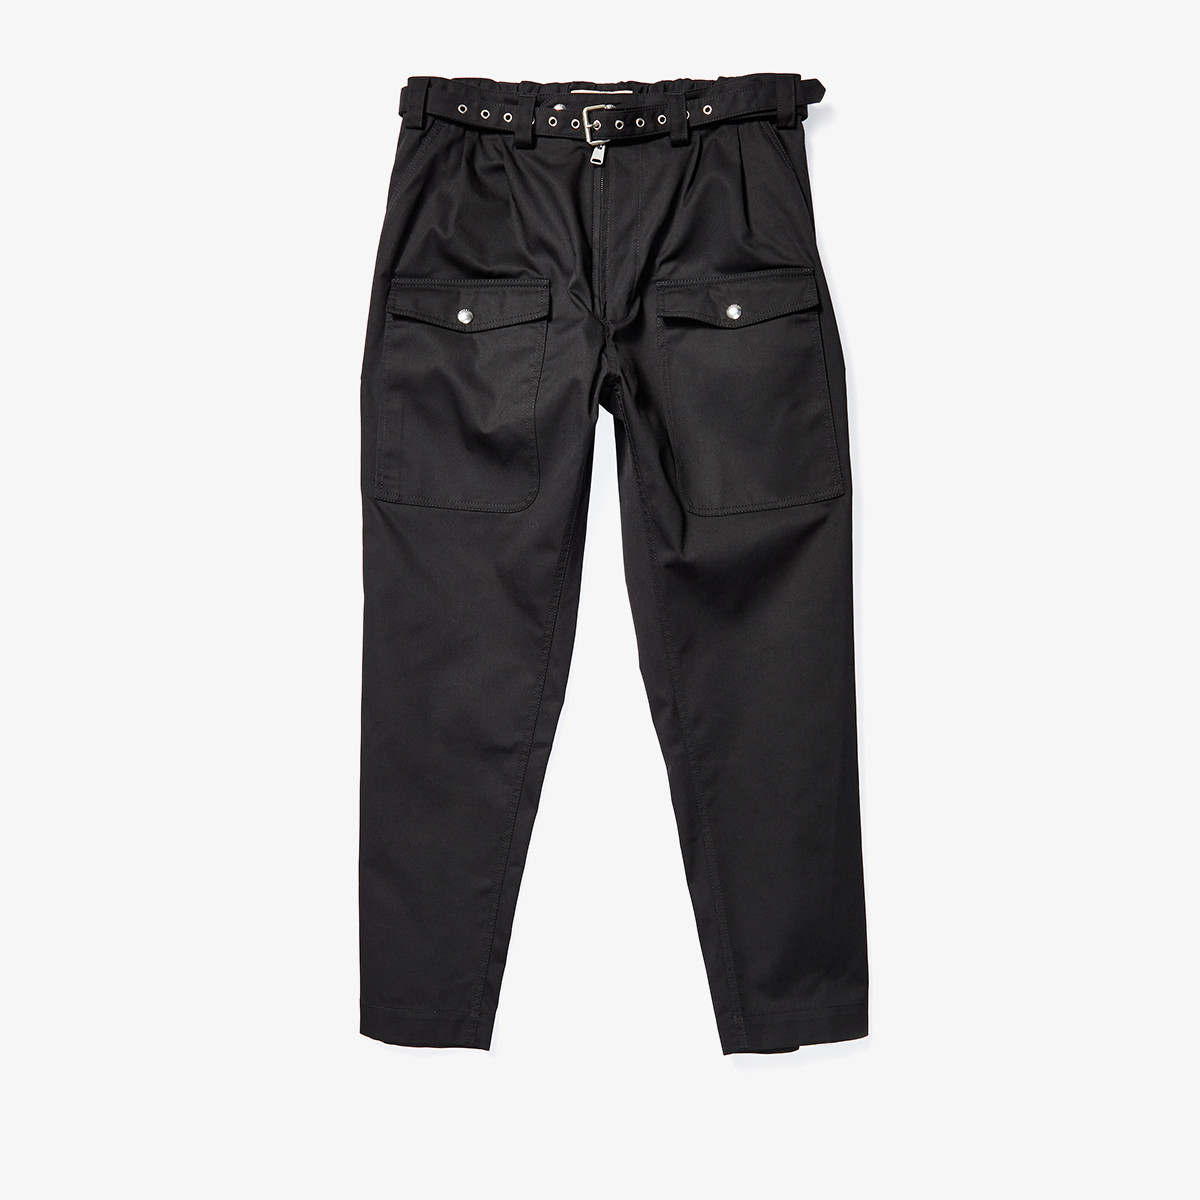 Imbracaminte barbati marni detailed relax fit cargo pants black